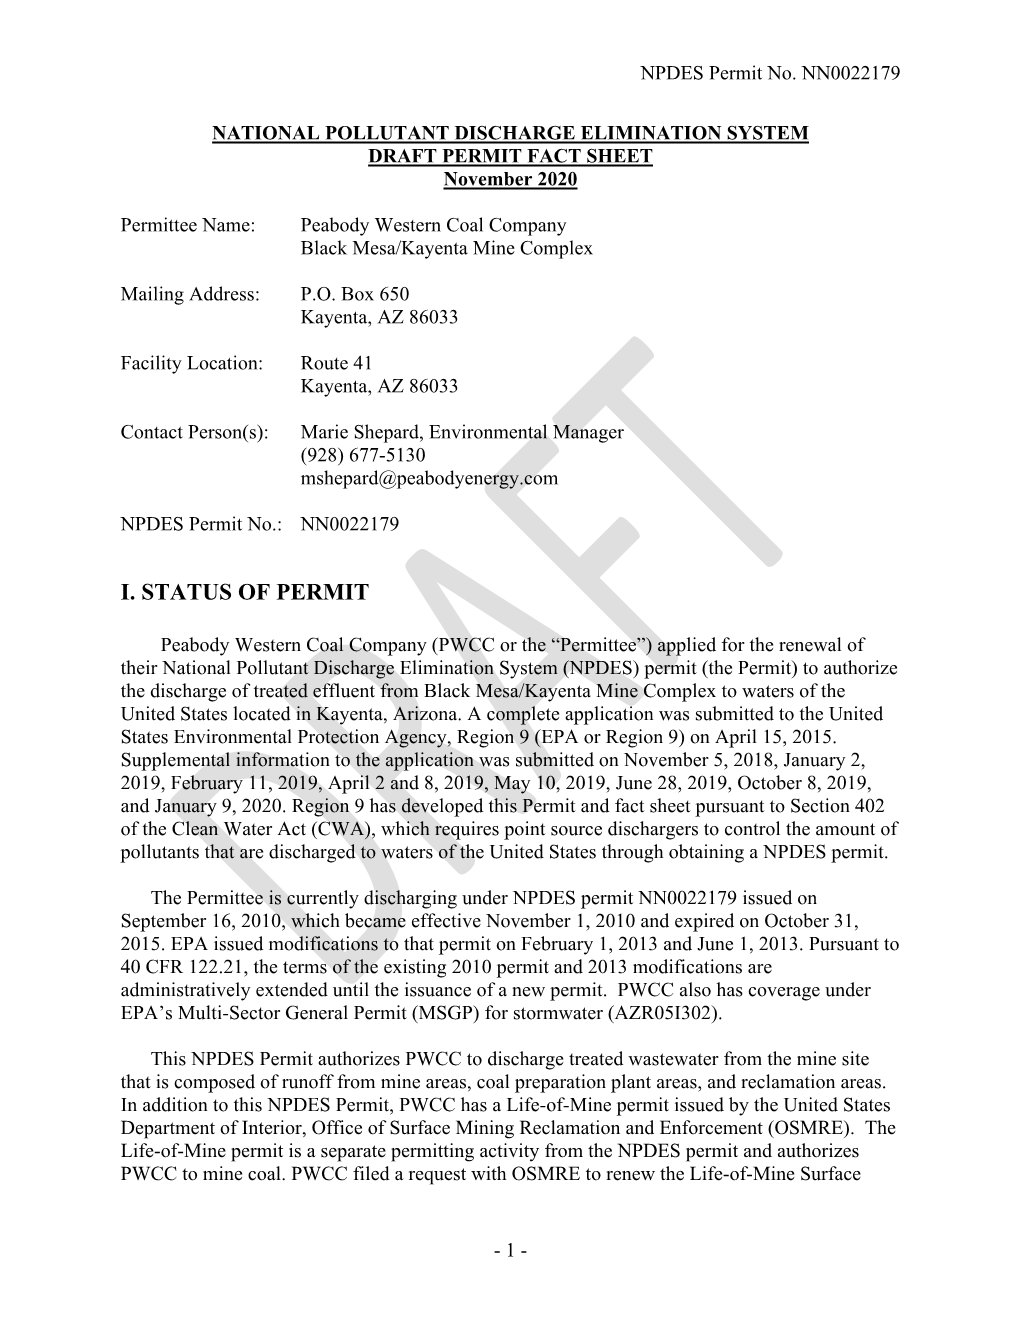 DRAFT NPDES Permit Fact Sheet: Black Mesa/Kayenta Mine Complex